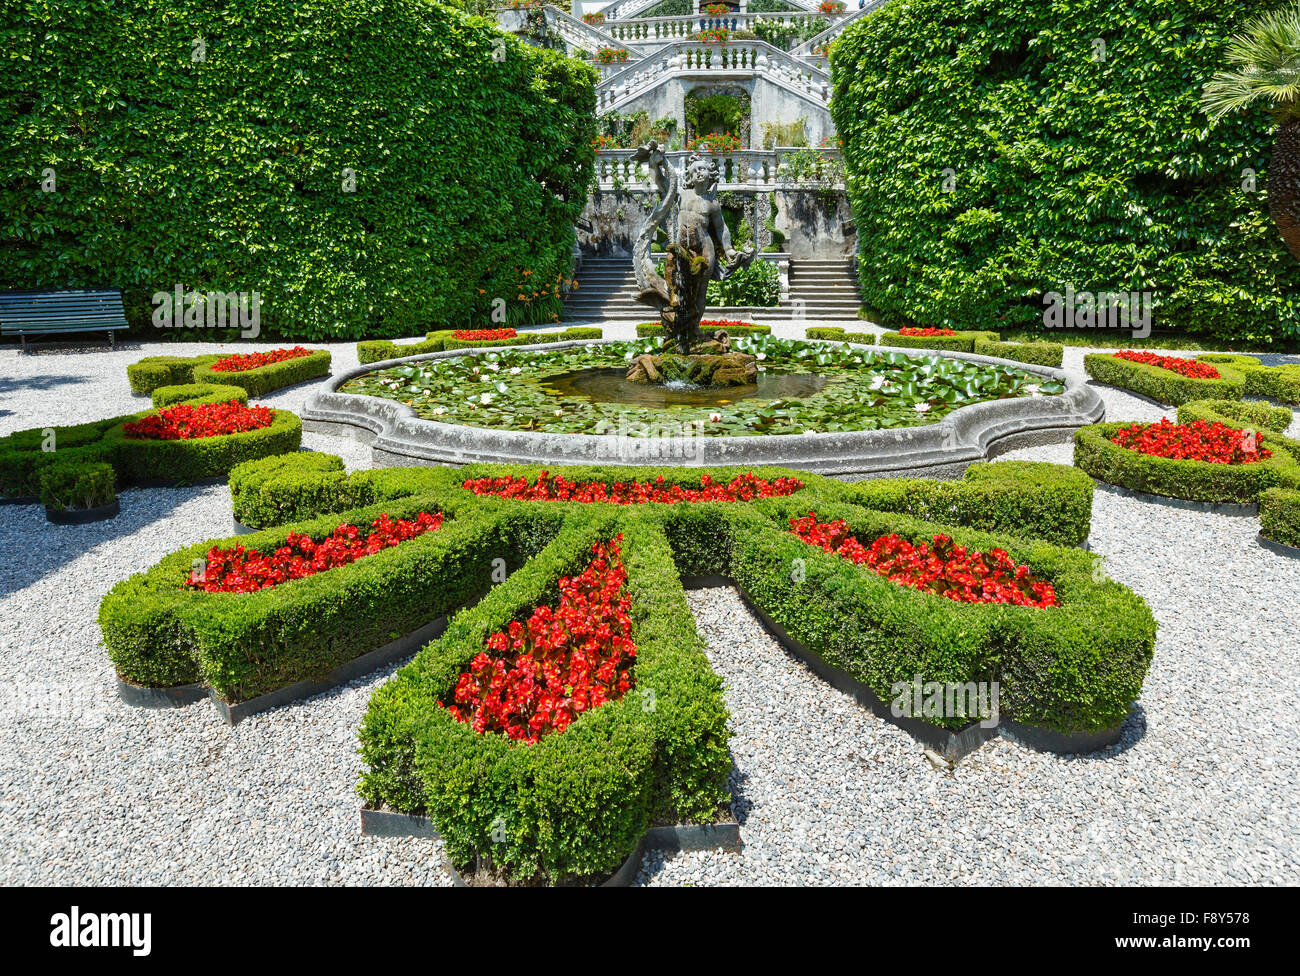 Magnificent park with fountain, statue, flower beds. Villa Carlotta, Italy, Tremezzo, Lake Como.  Built in 1690. Stock Photo